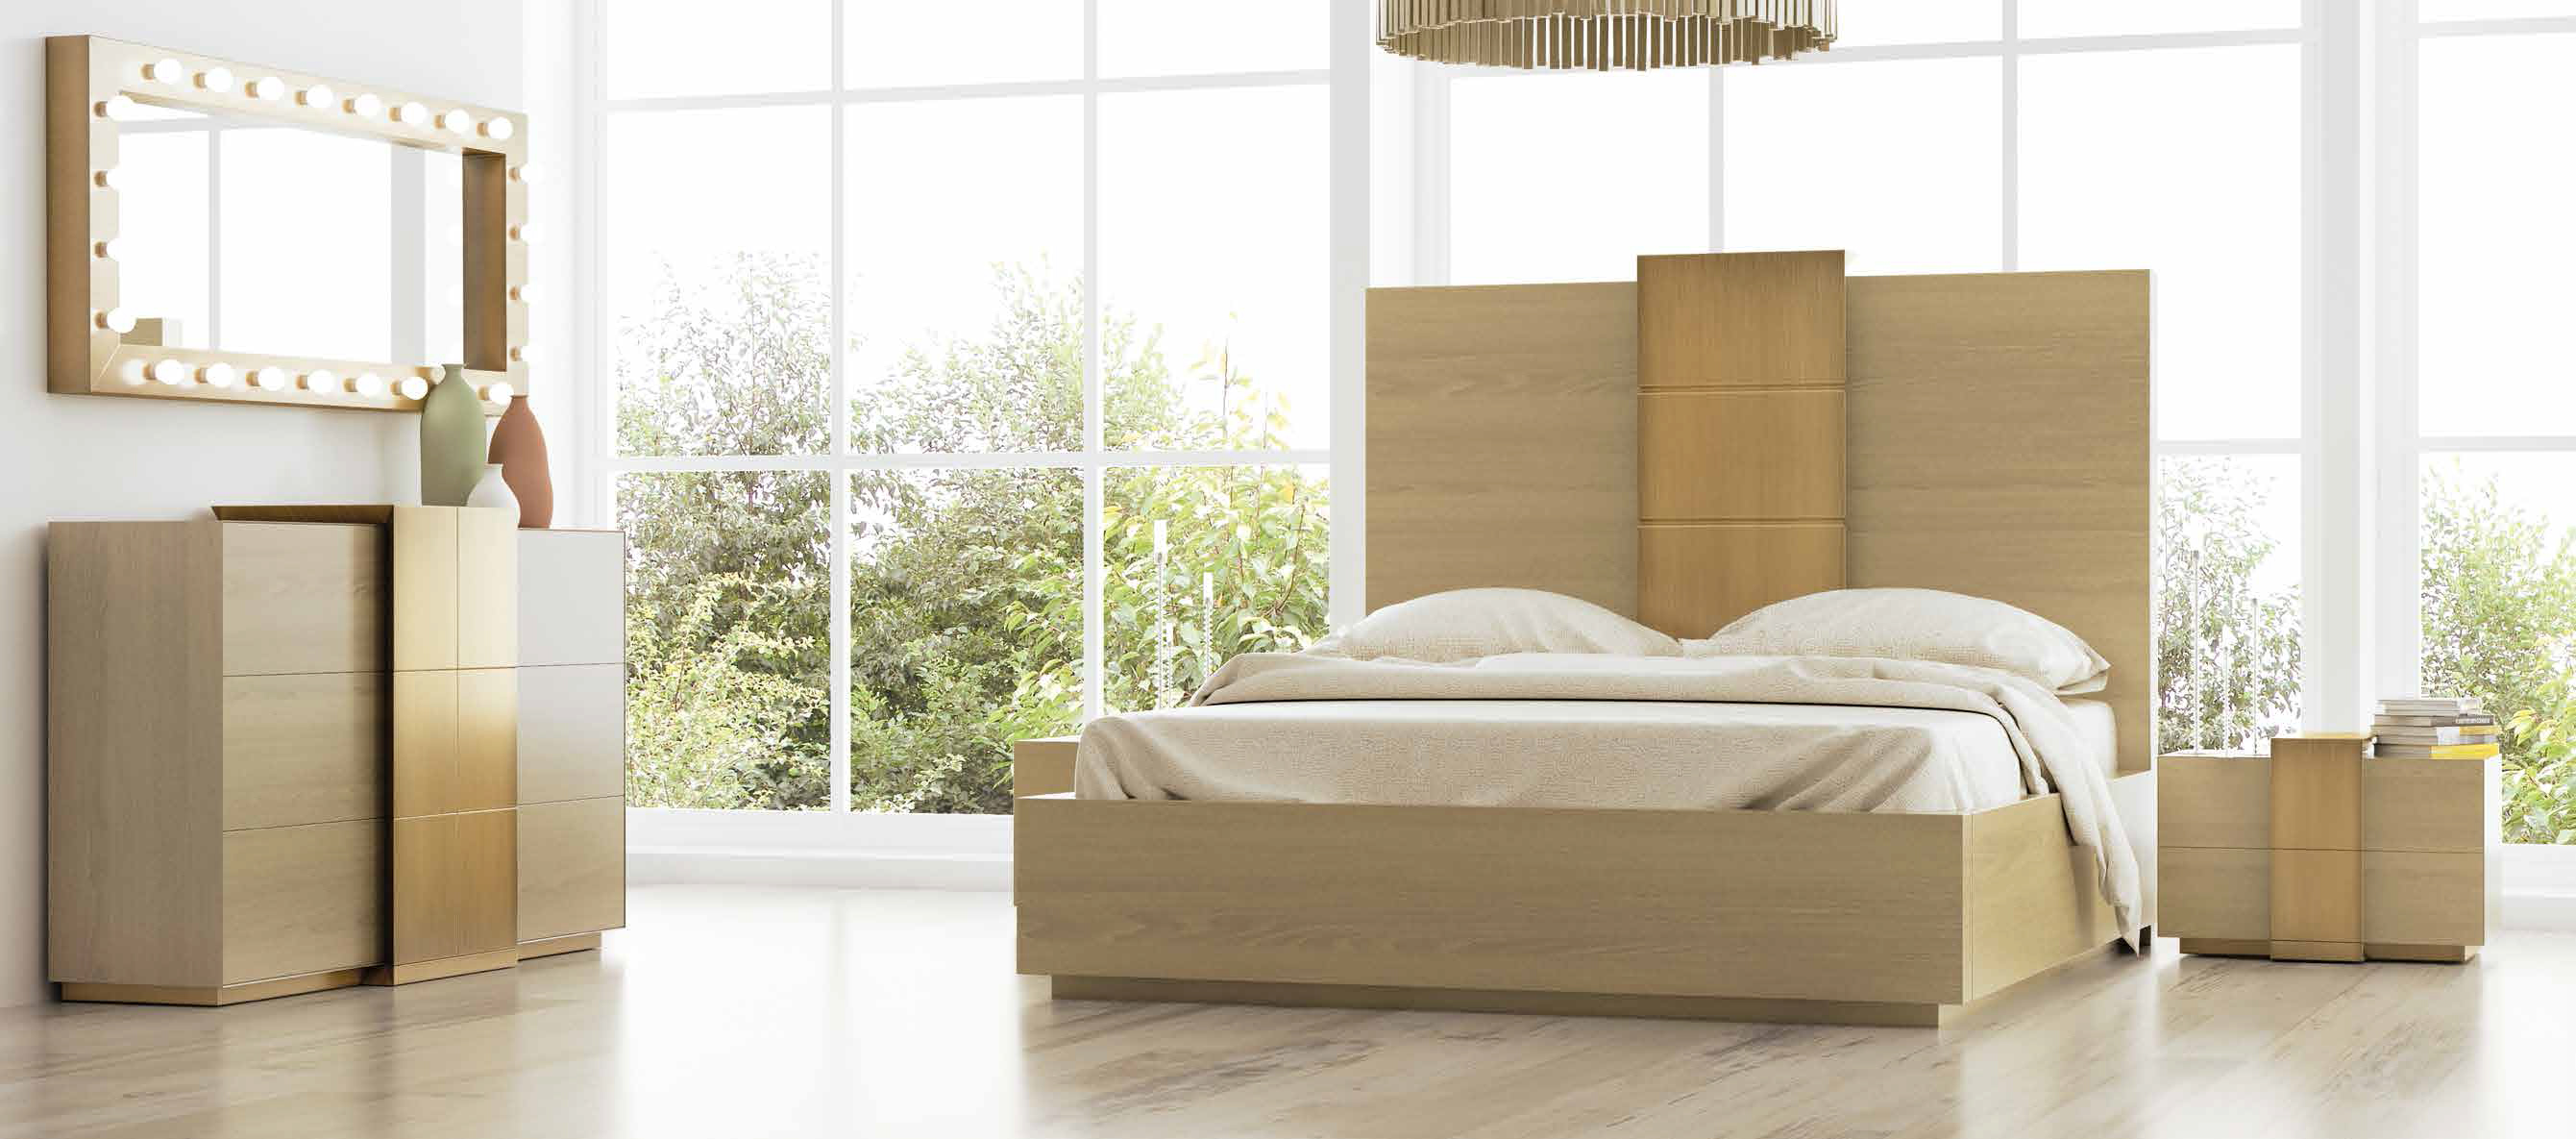 Brands Franco Furniture Bedrooms vol2, Spain DOR 10